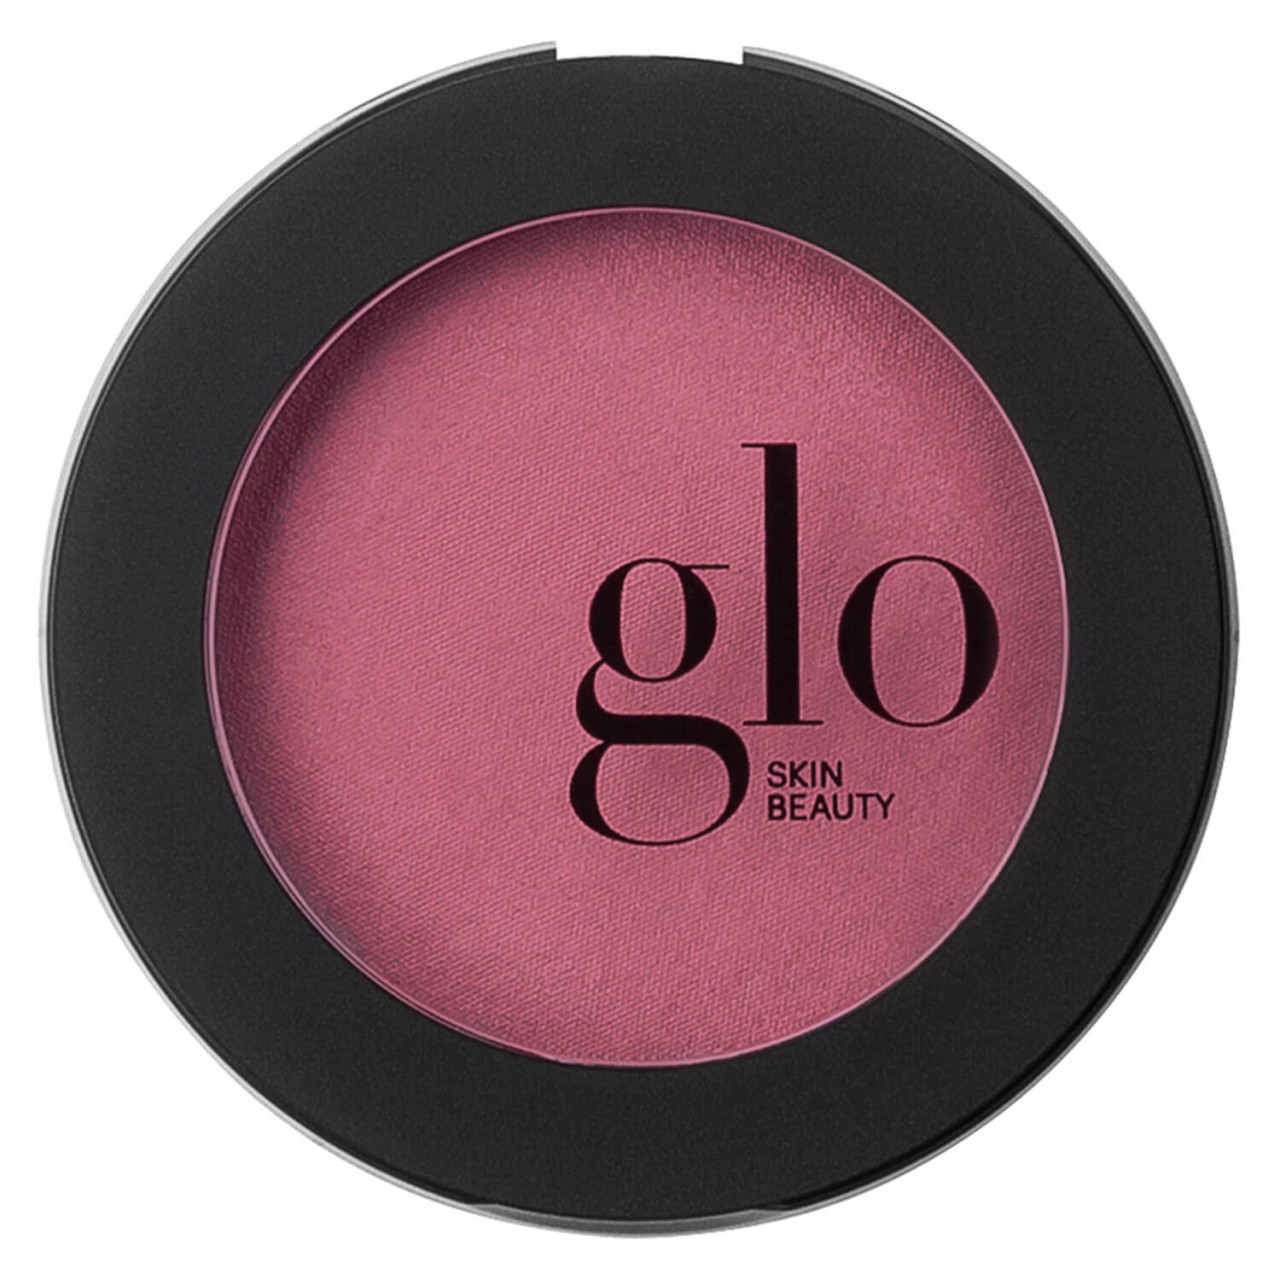 Glo Skin Beauty Blush - Blush Passion von Glo Skin Beauty